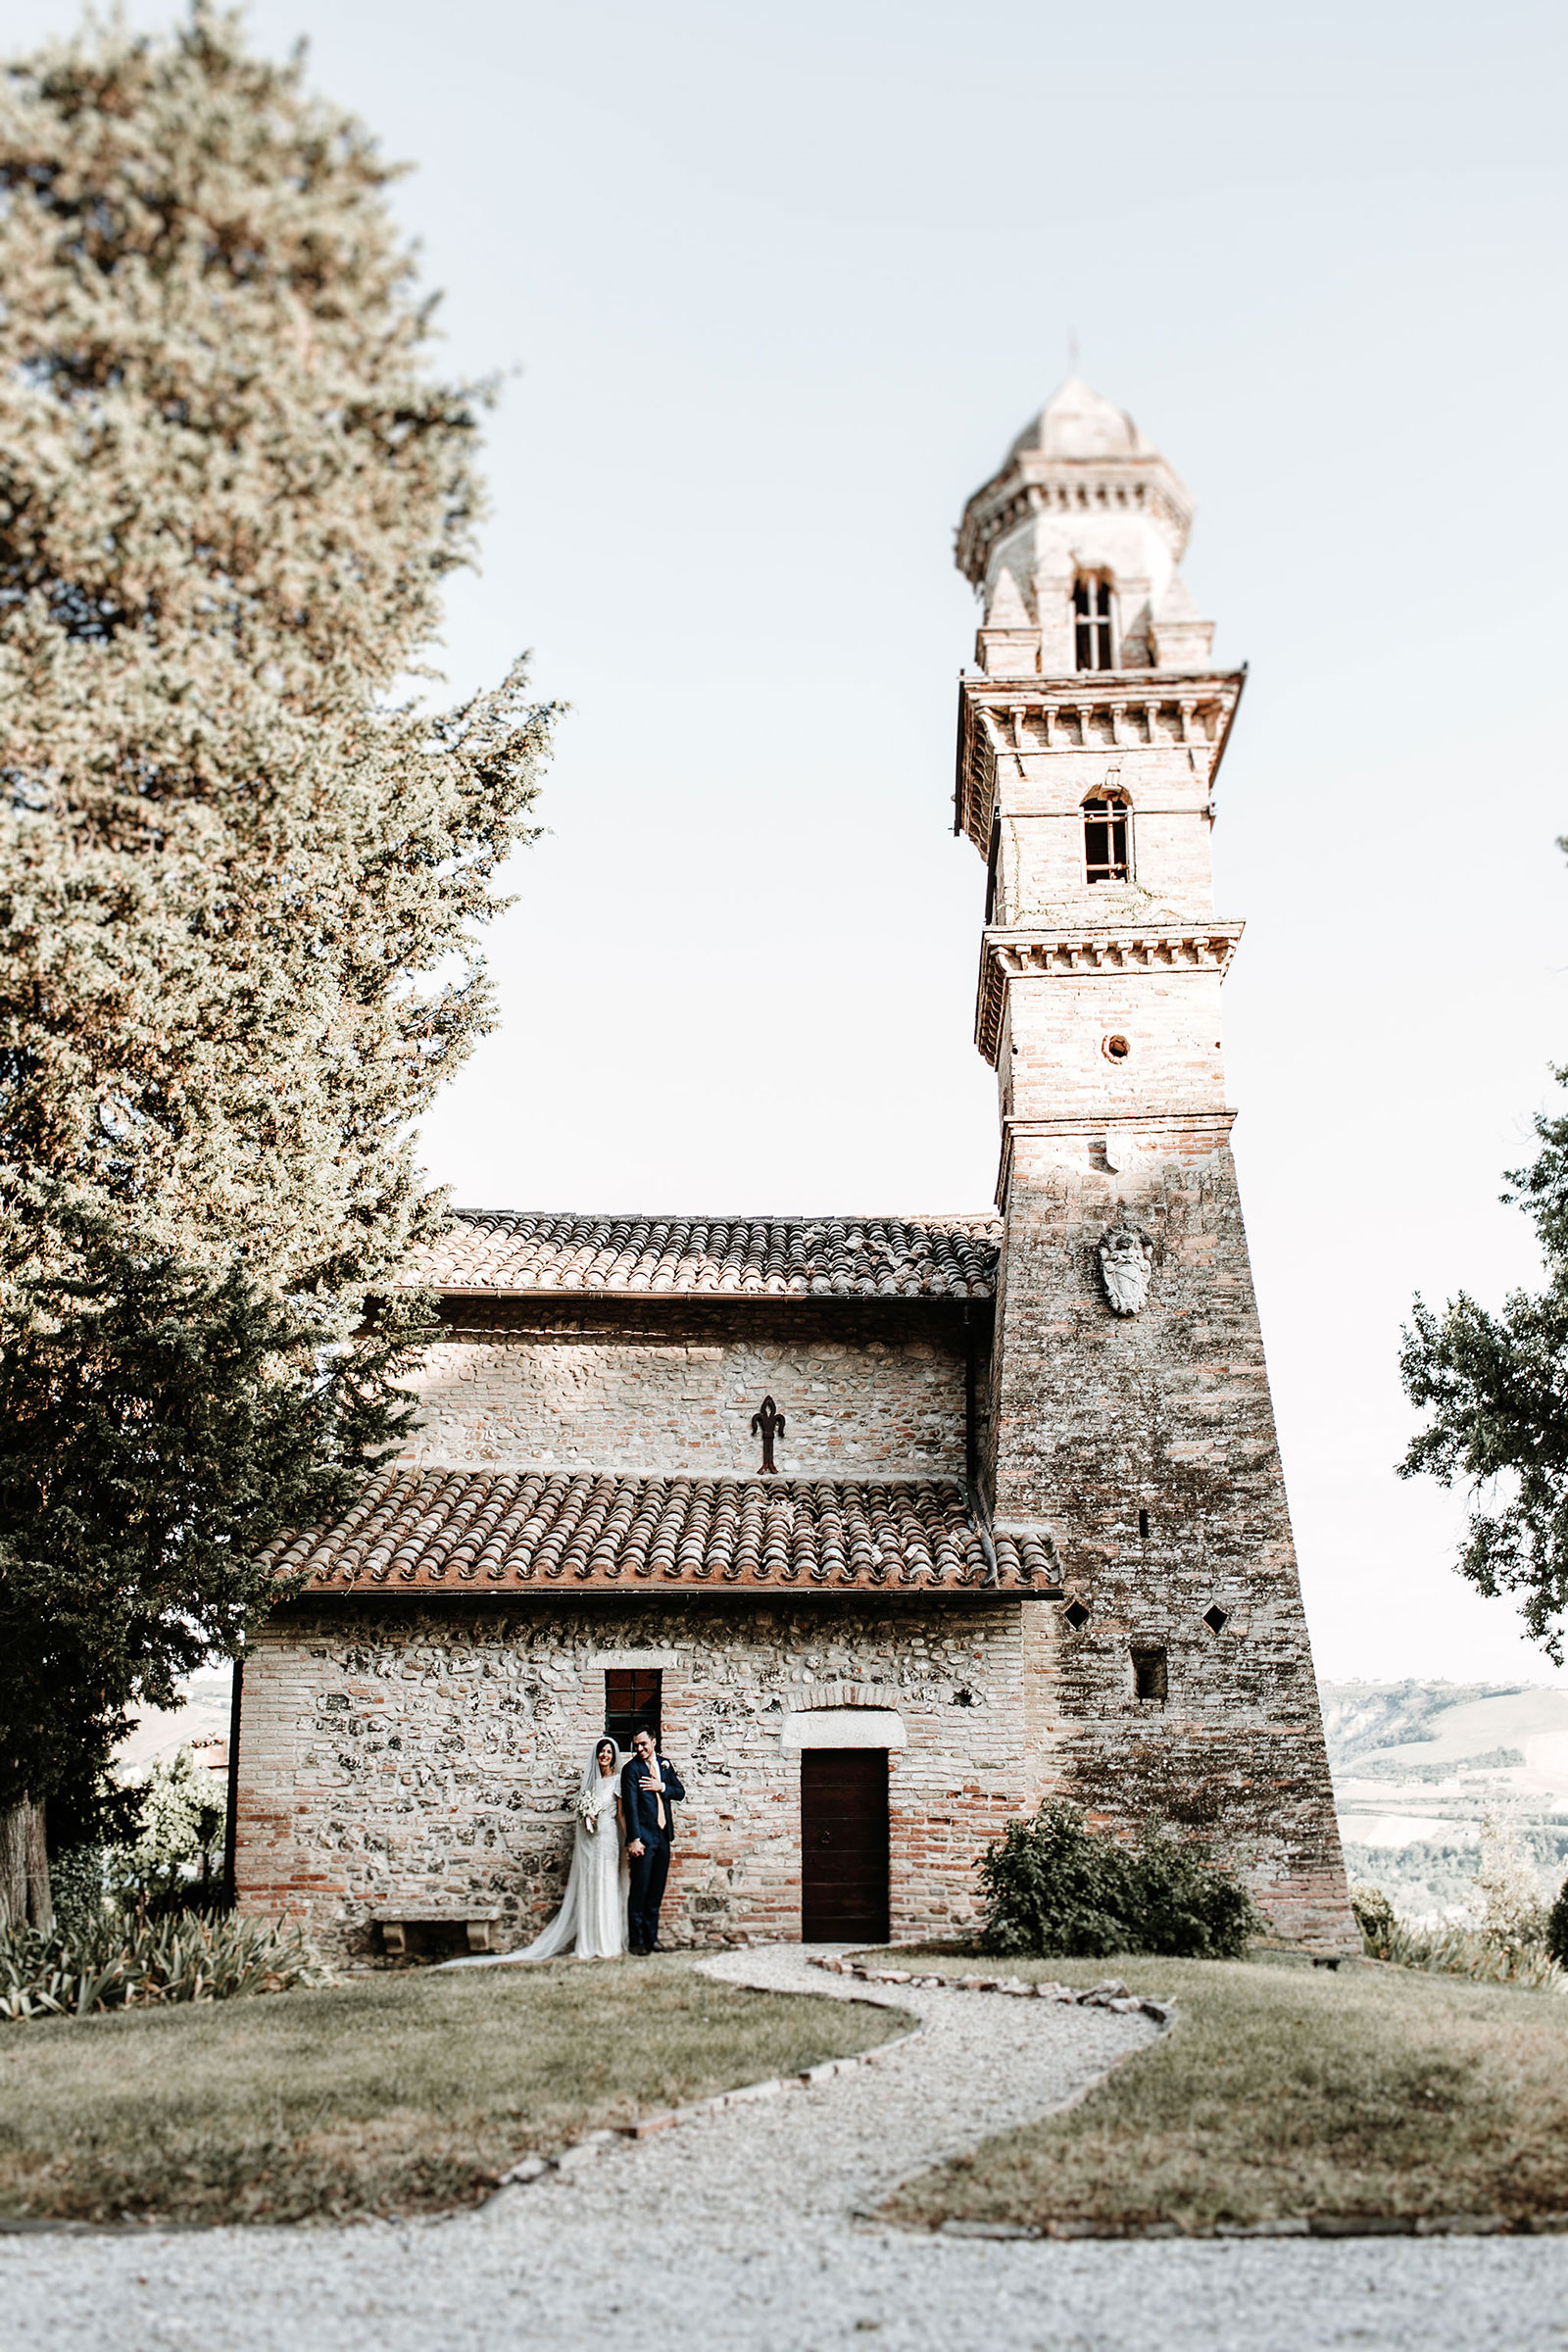 Matrimonio al Borgo Seghetti Panichi - Wedding at Borgo Seghetti Panichi